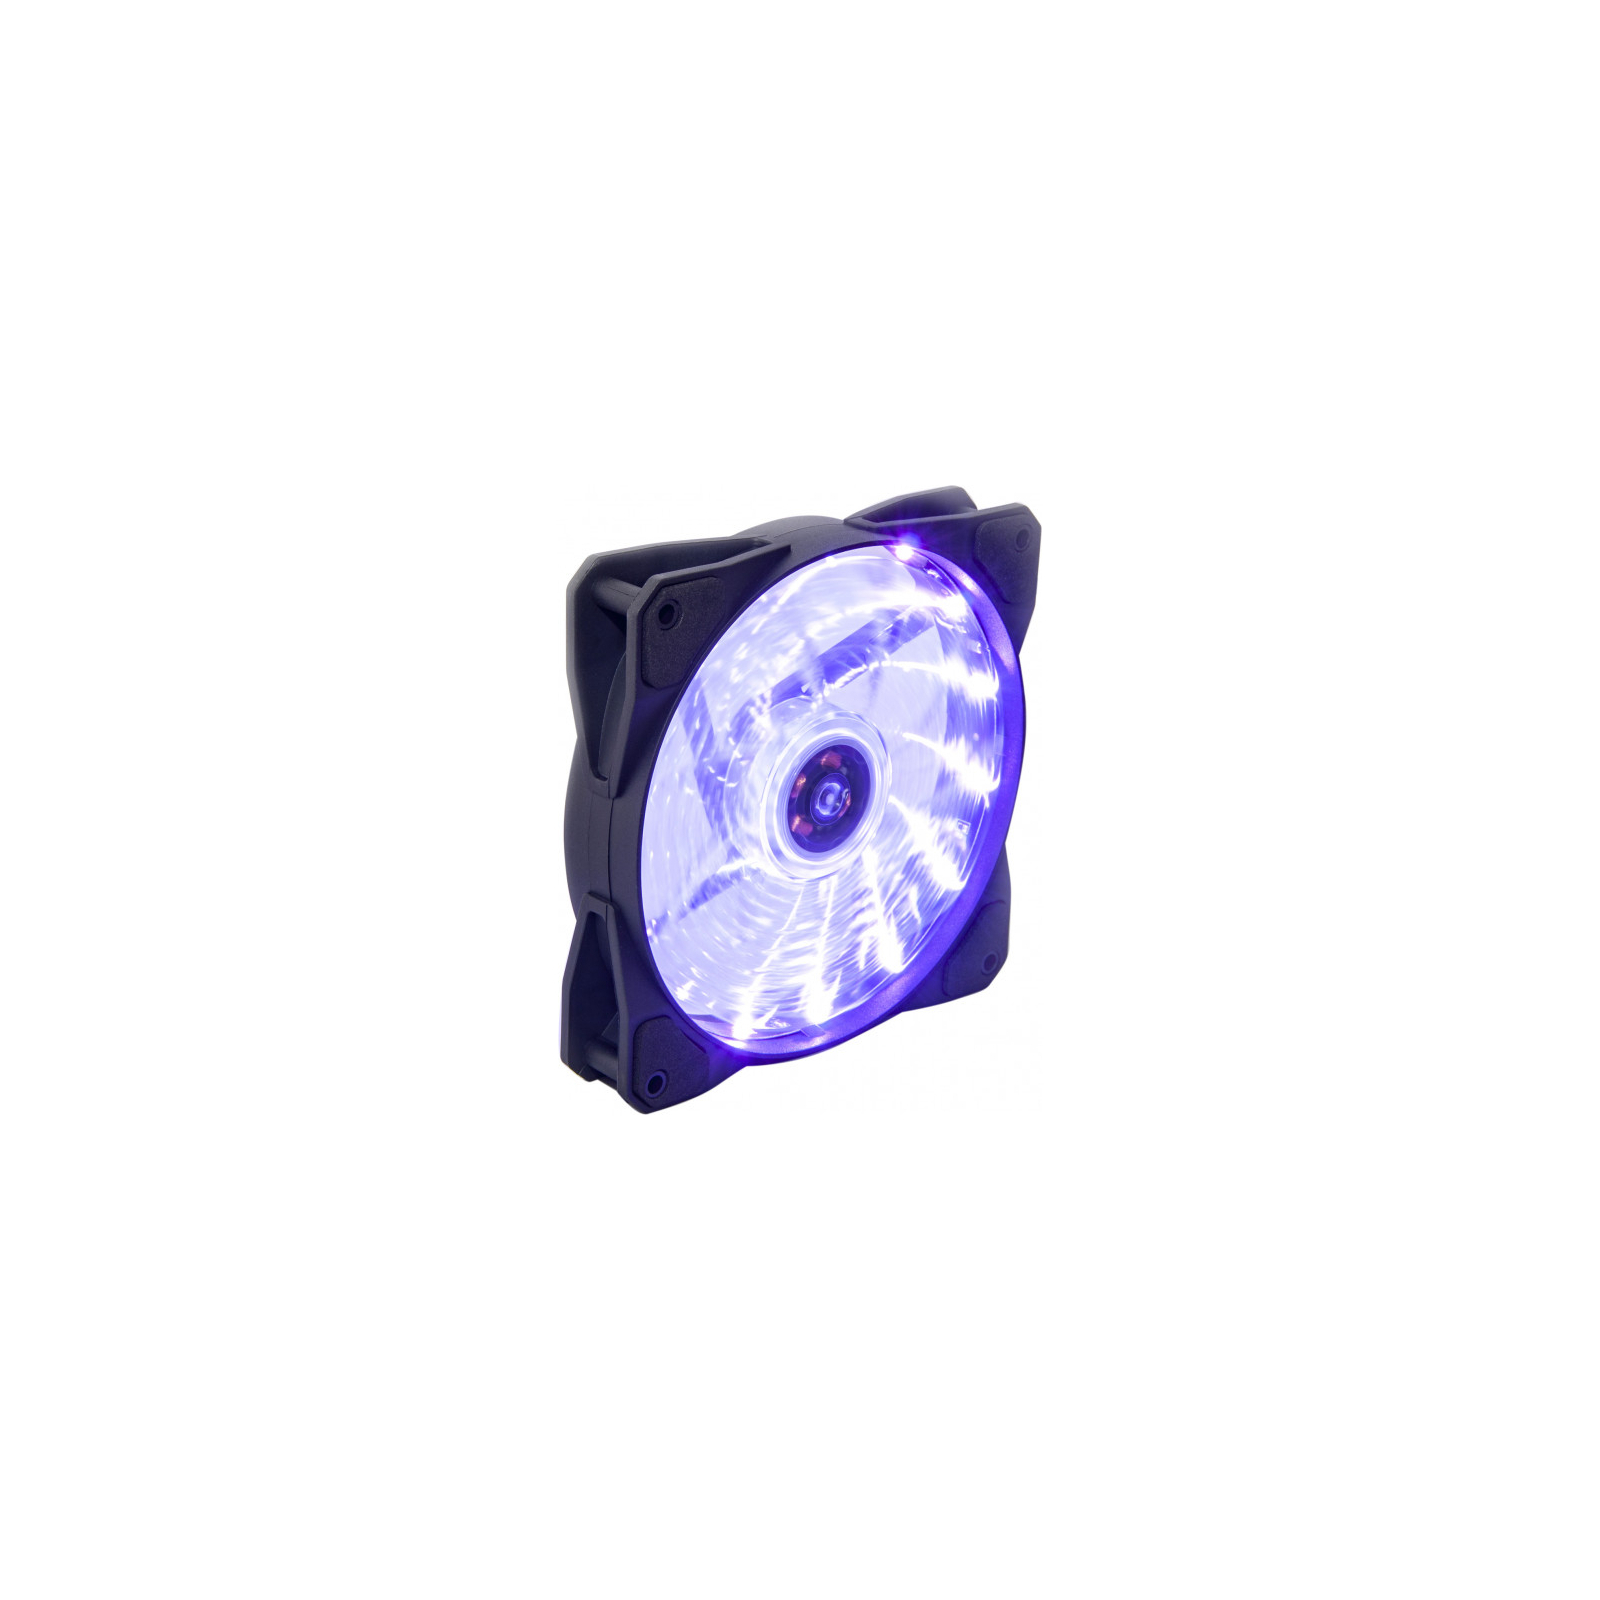 Кулер для корпуса Frime Iris LED Fan 15LED Purple (FLF-HB120P15)